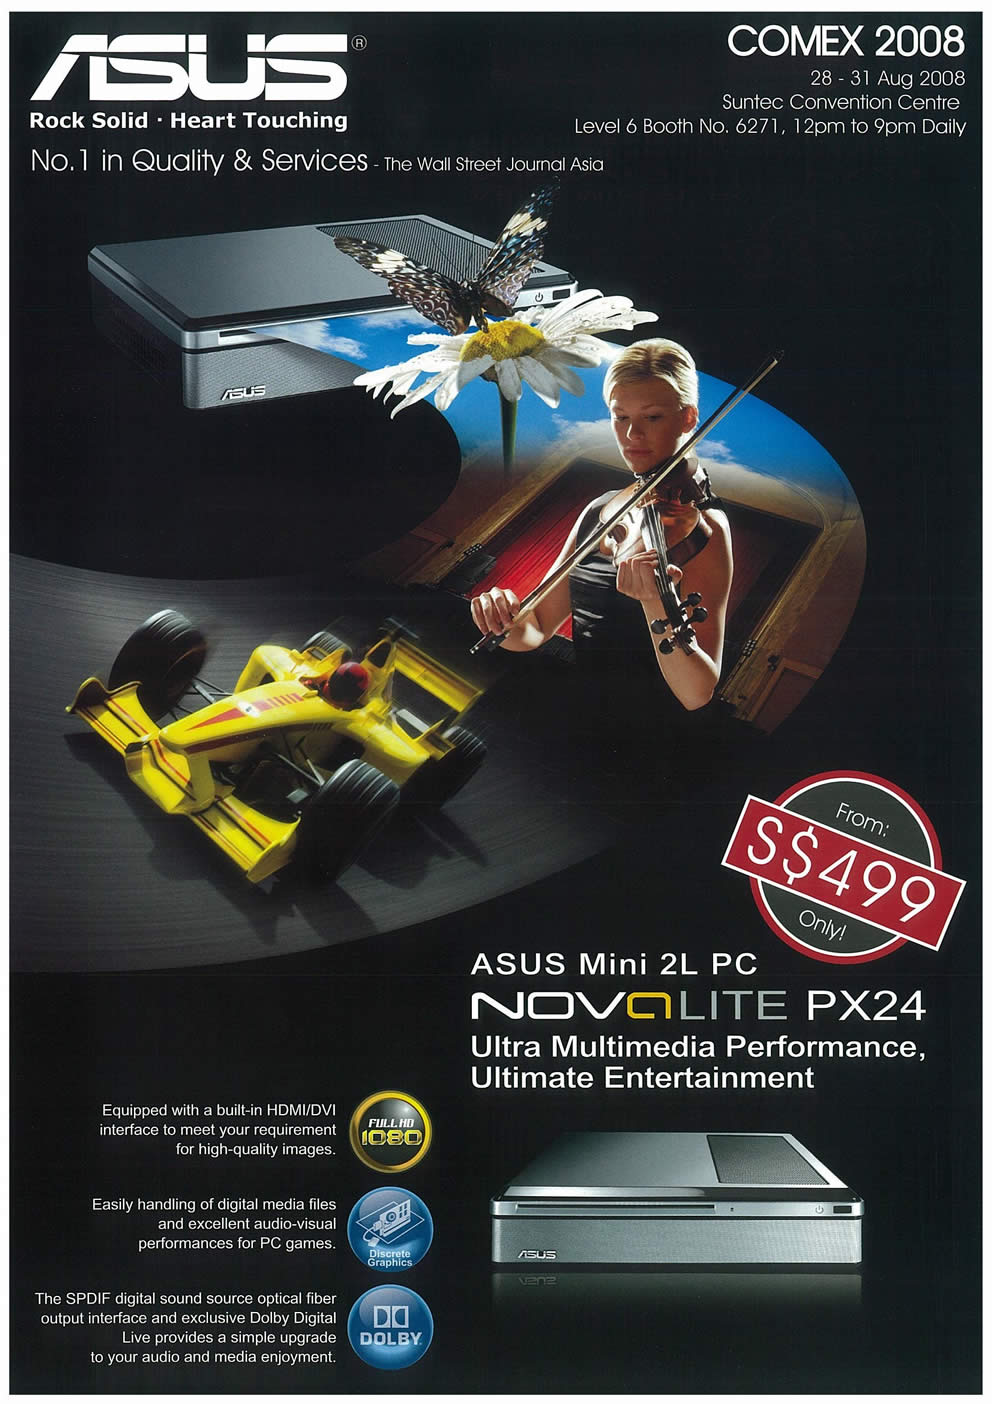 Comex 2008 price list image brochure of ASUS Mini 2L PC Page 1